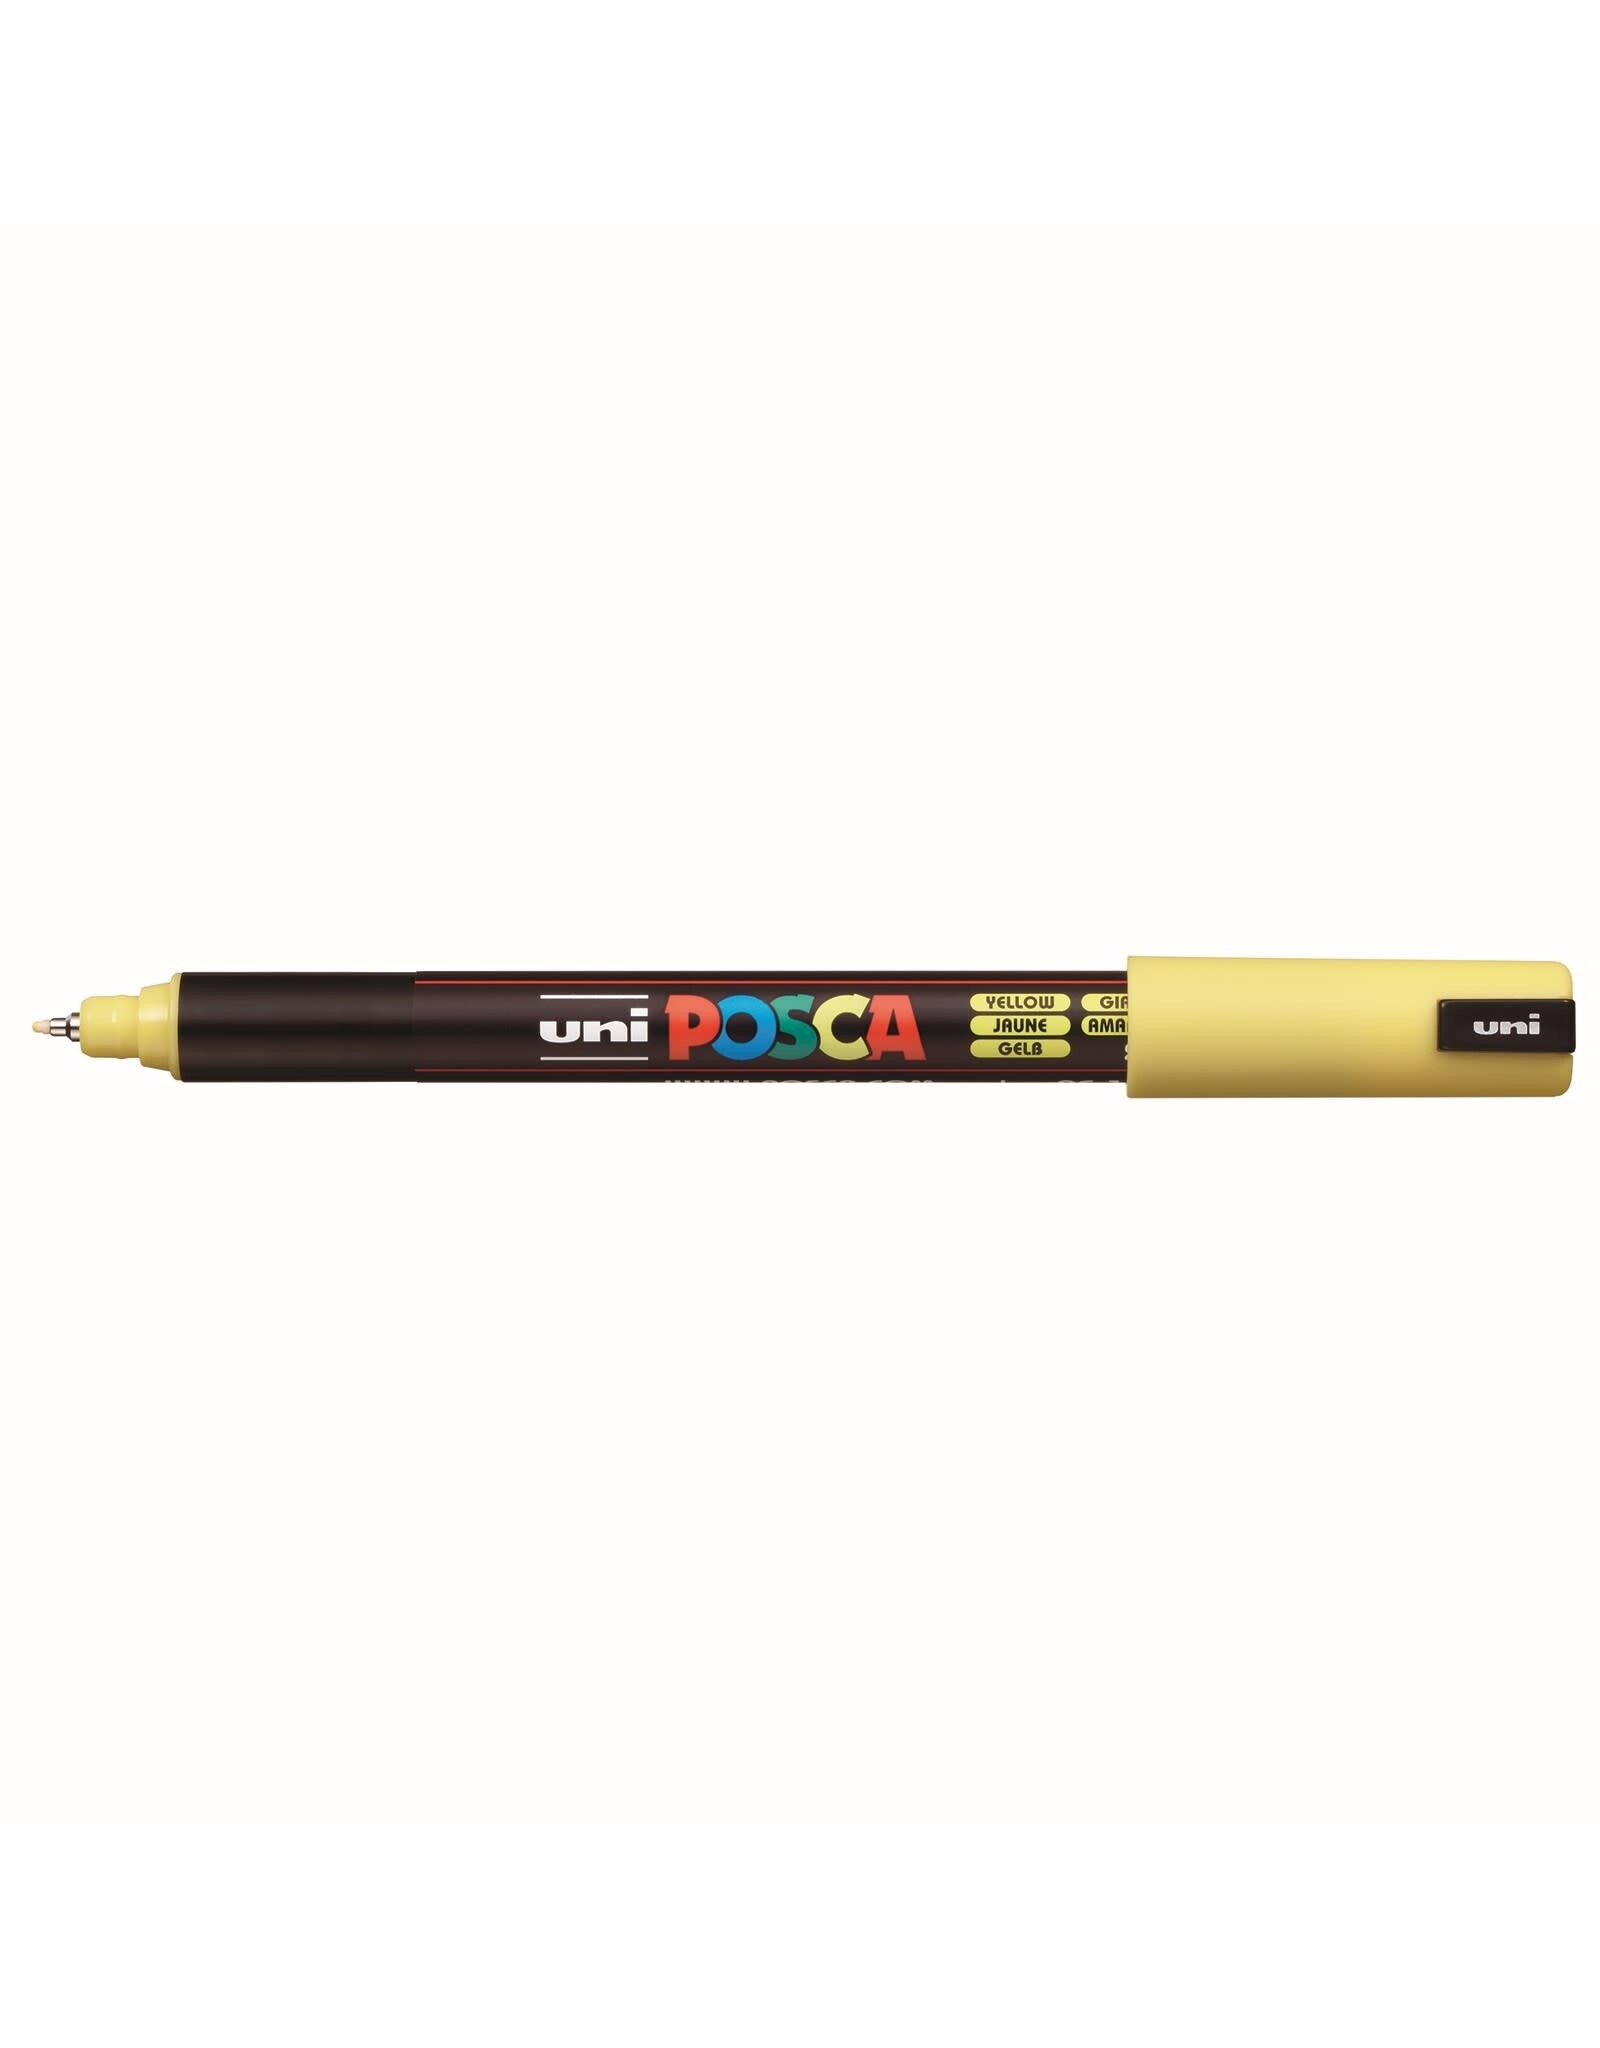 POSCA Uni POSCA Paint Marker, Extra Fine Metal Tip, Yellow